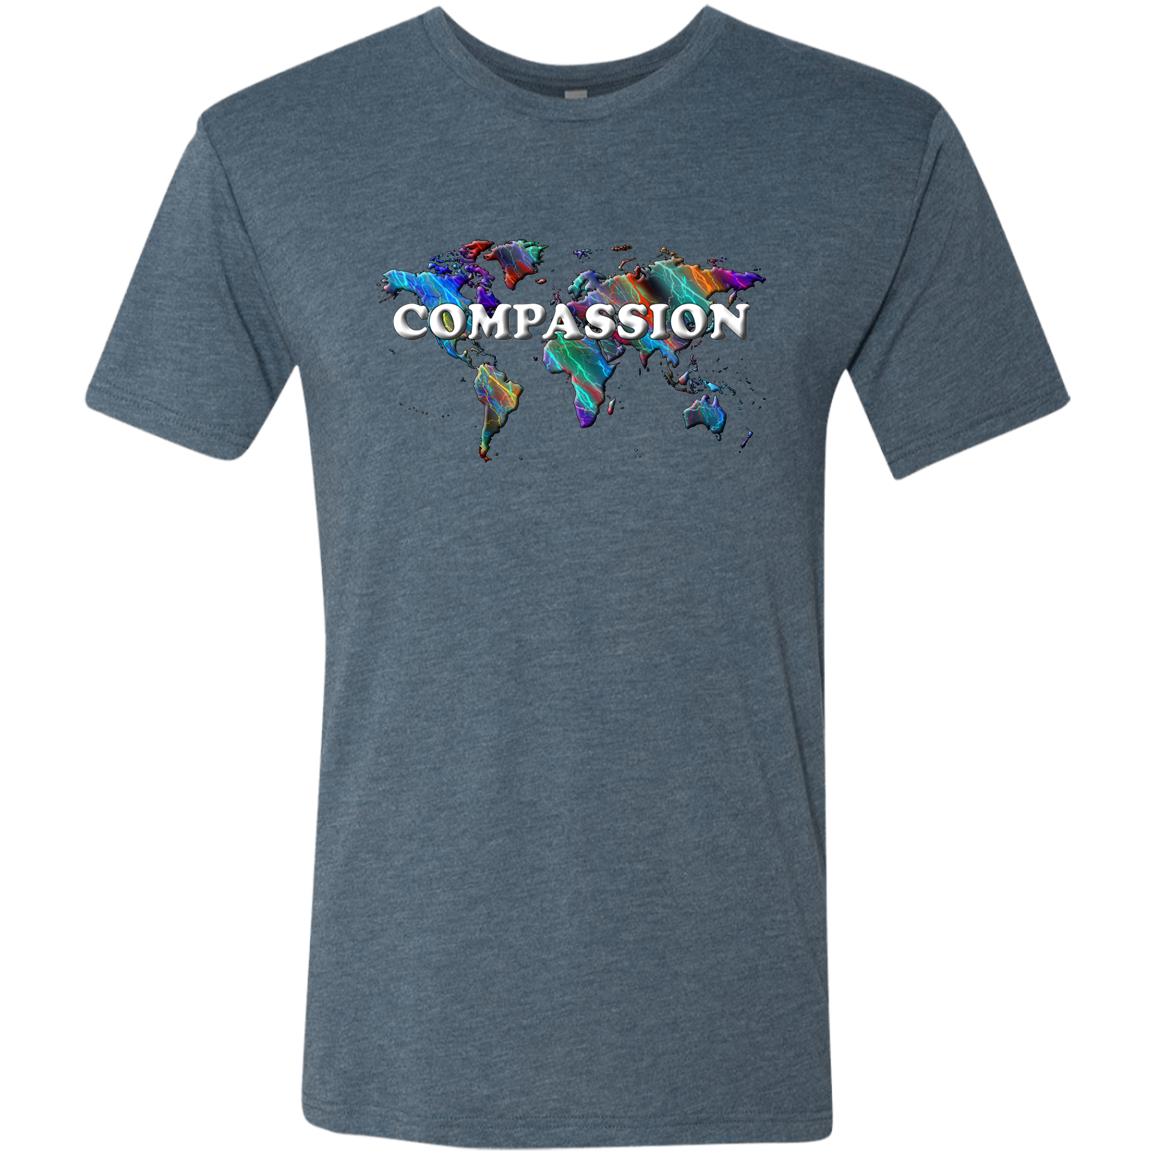 Compassion Statement T-Shirt